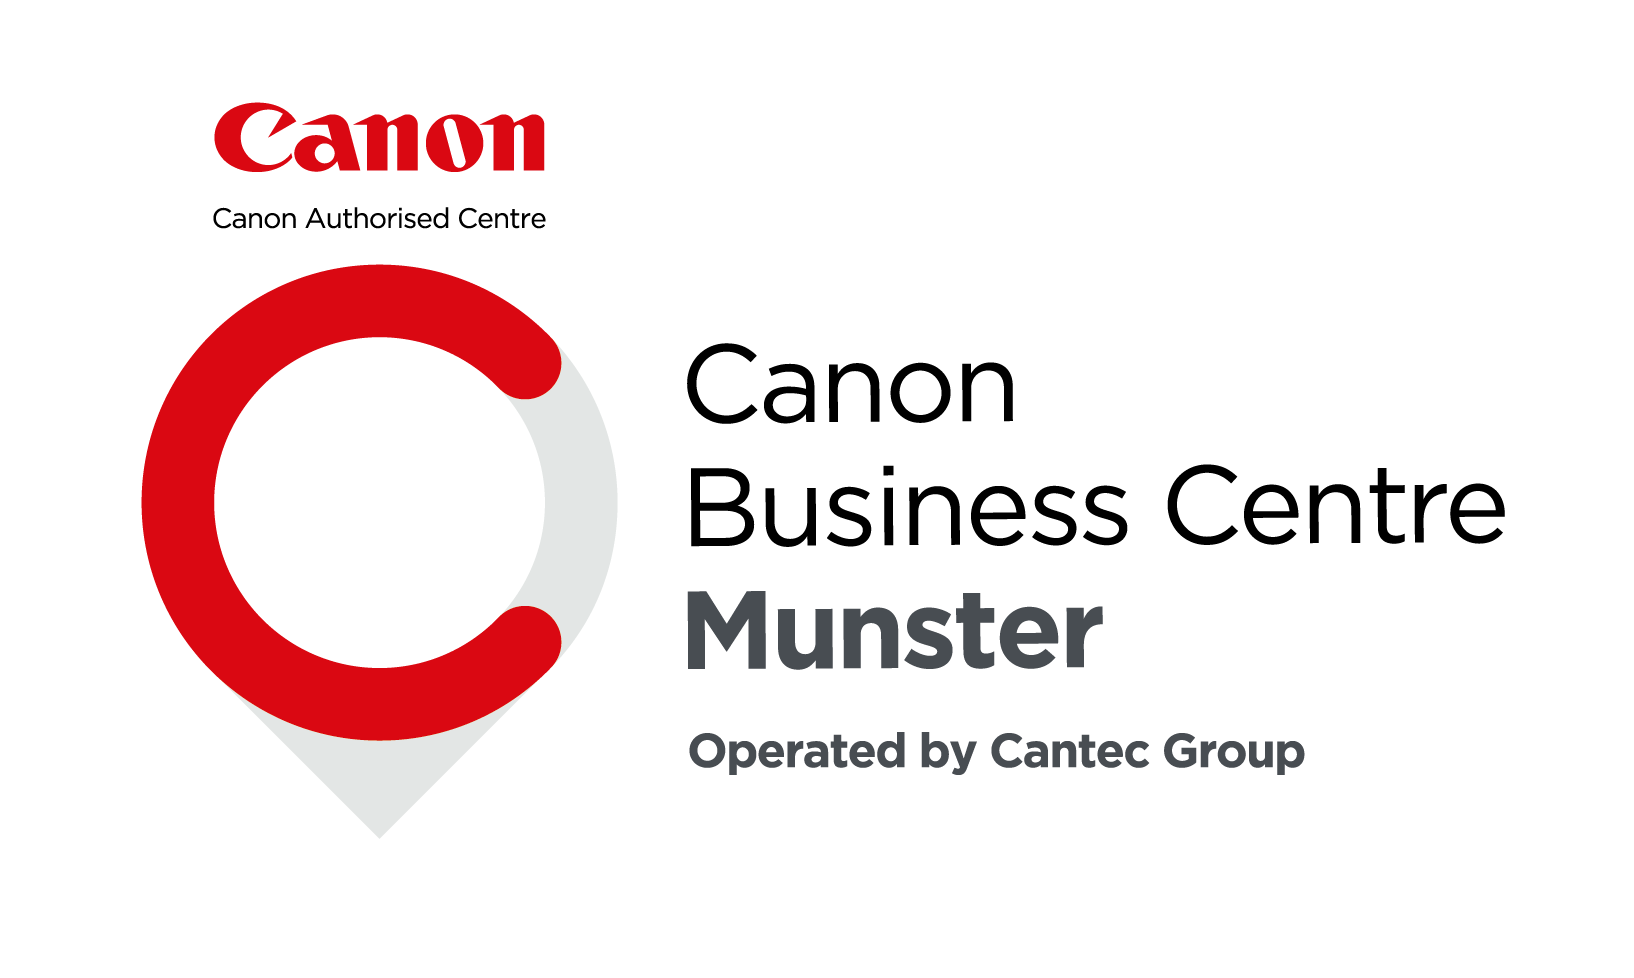 Canon Business Centre Munster